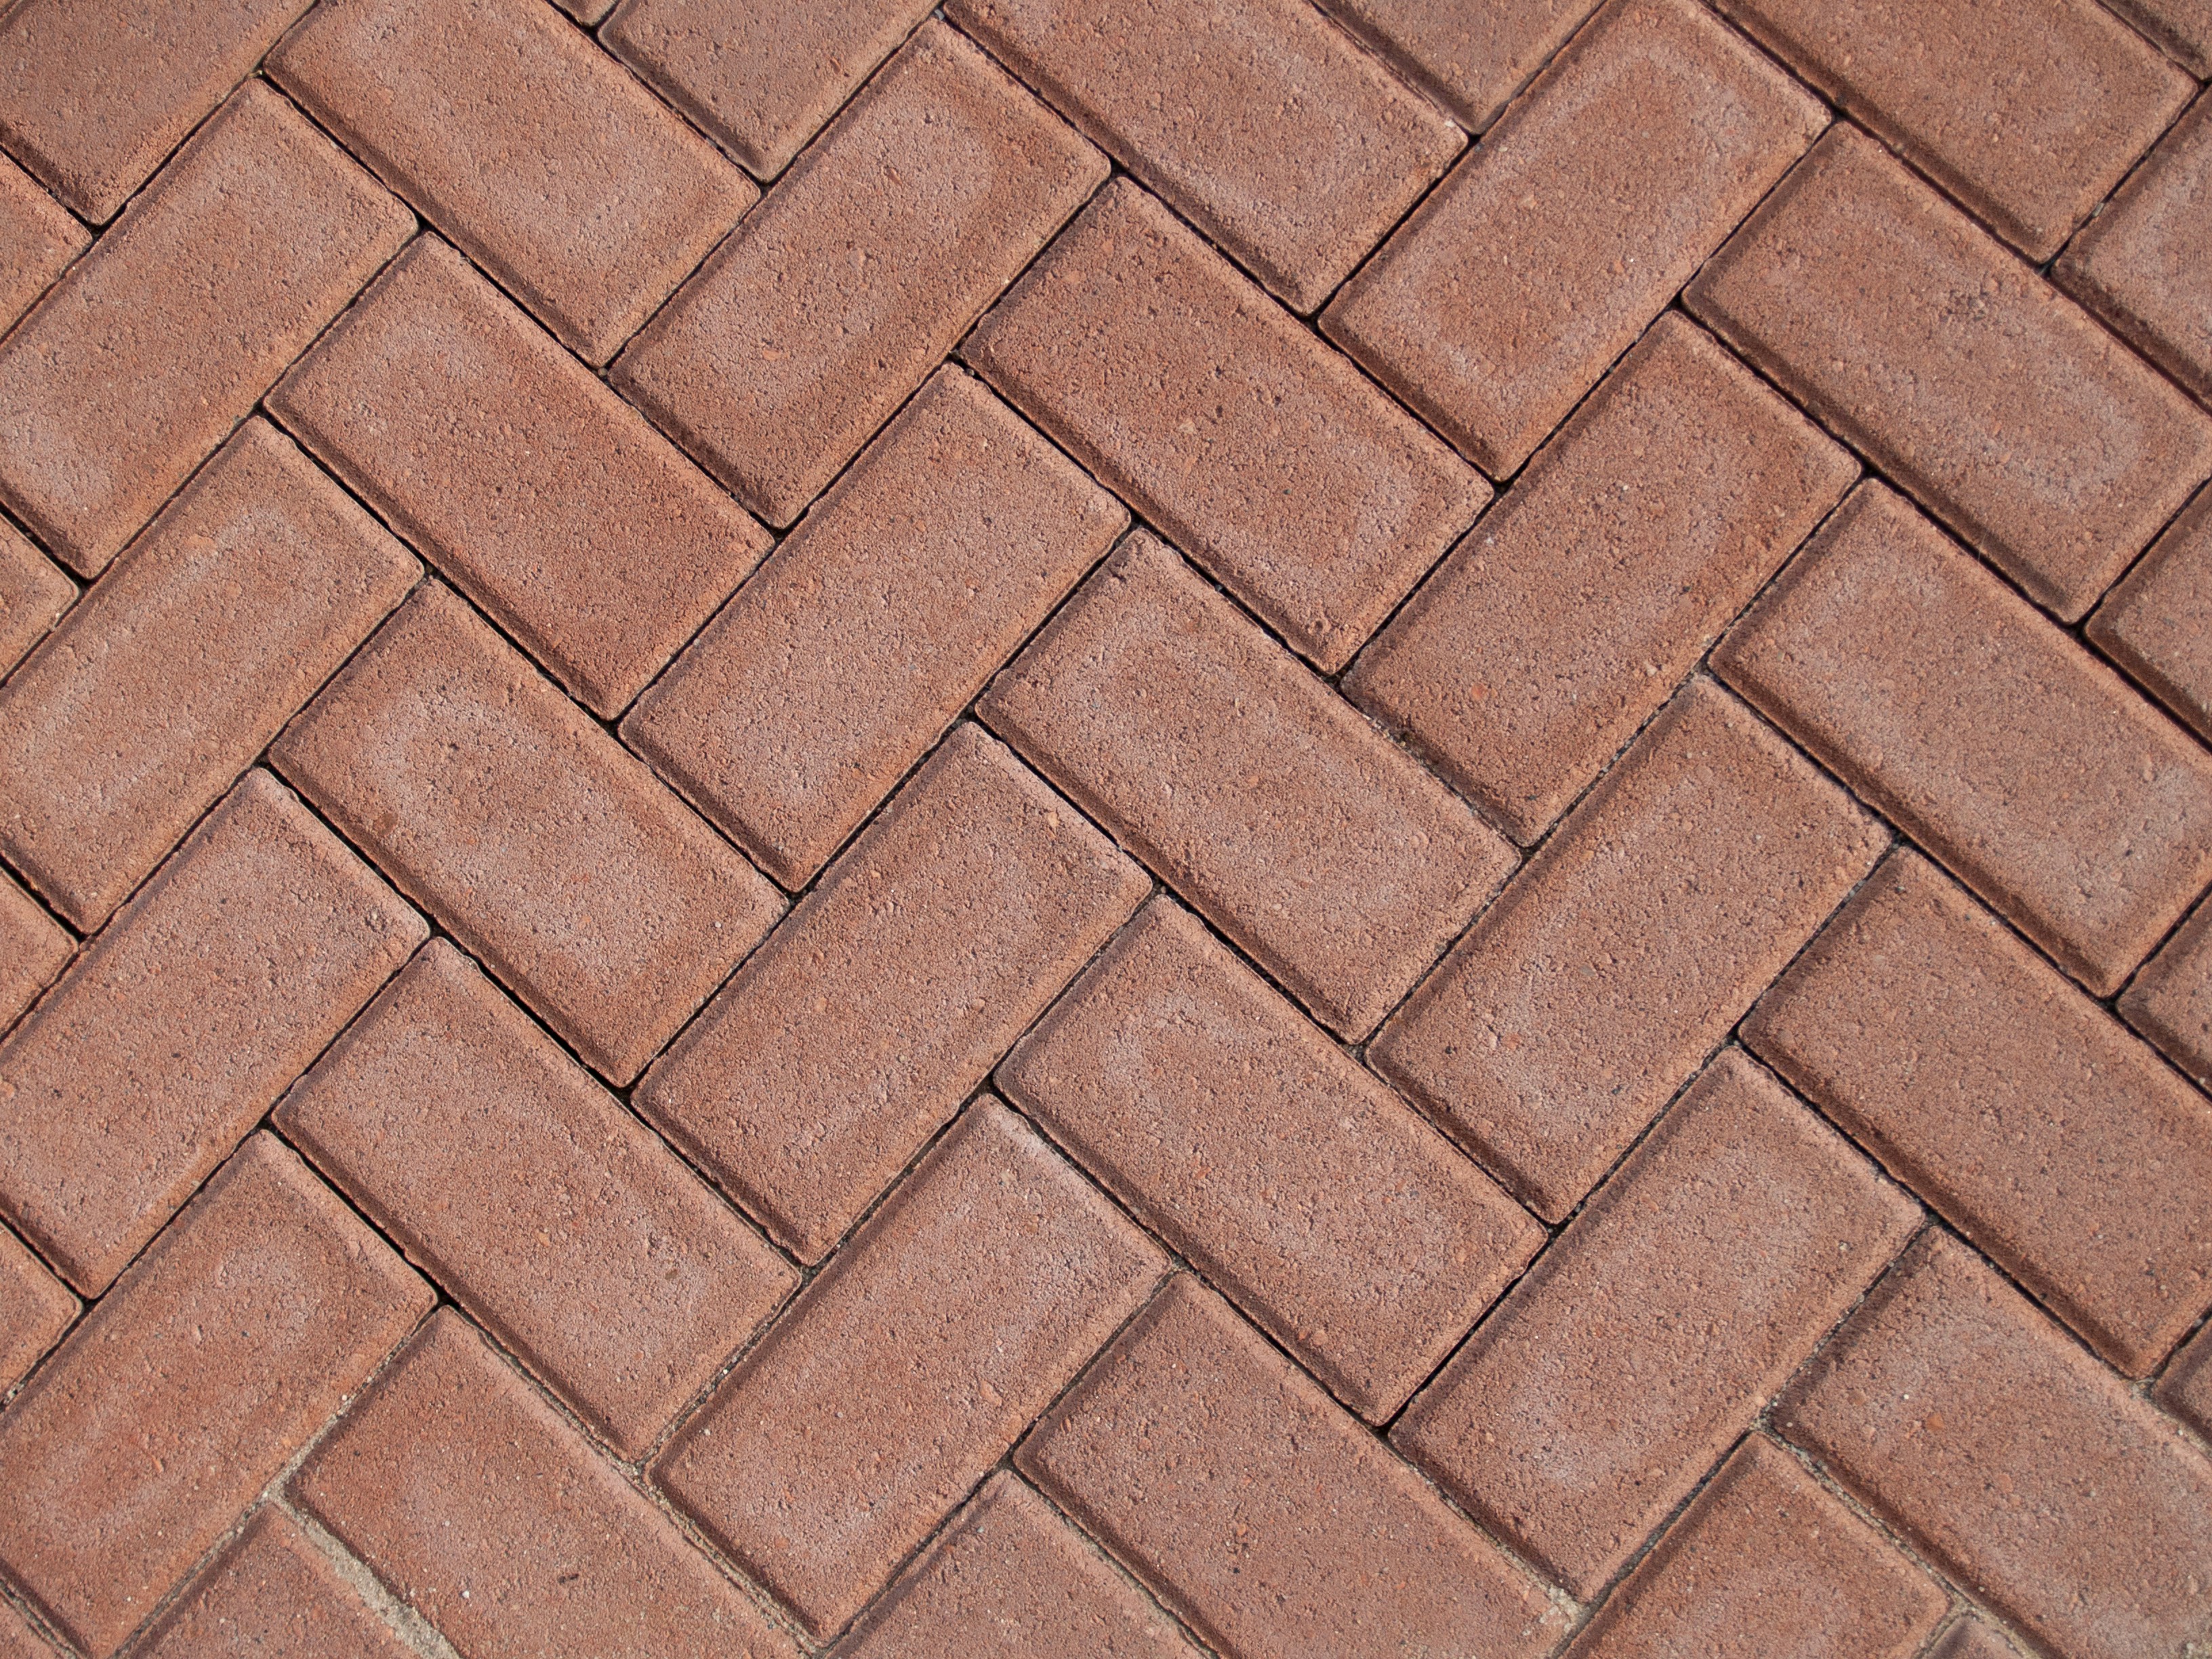 a close up of a red brick sidewalk